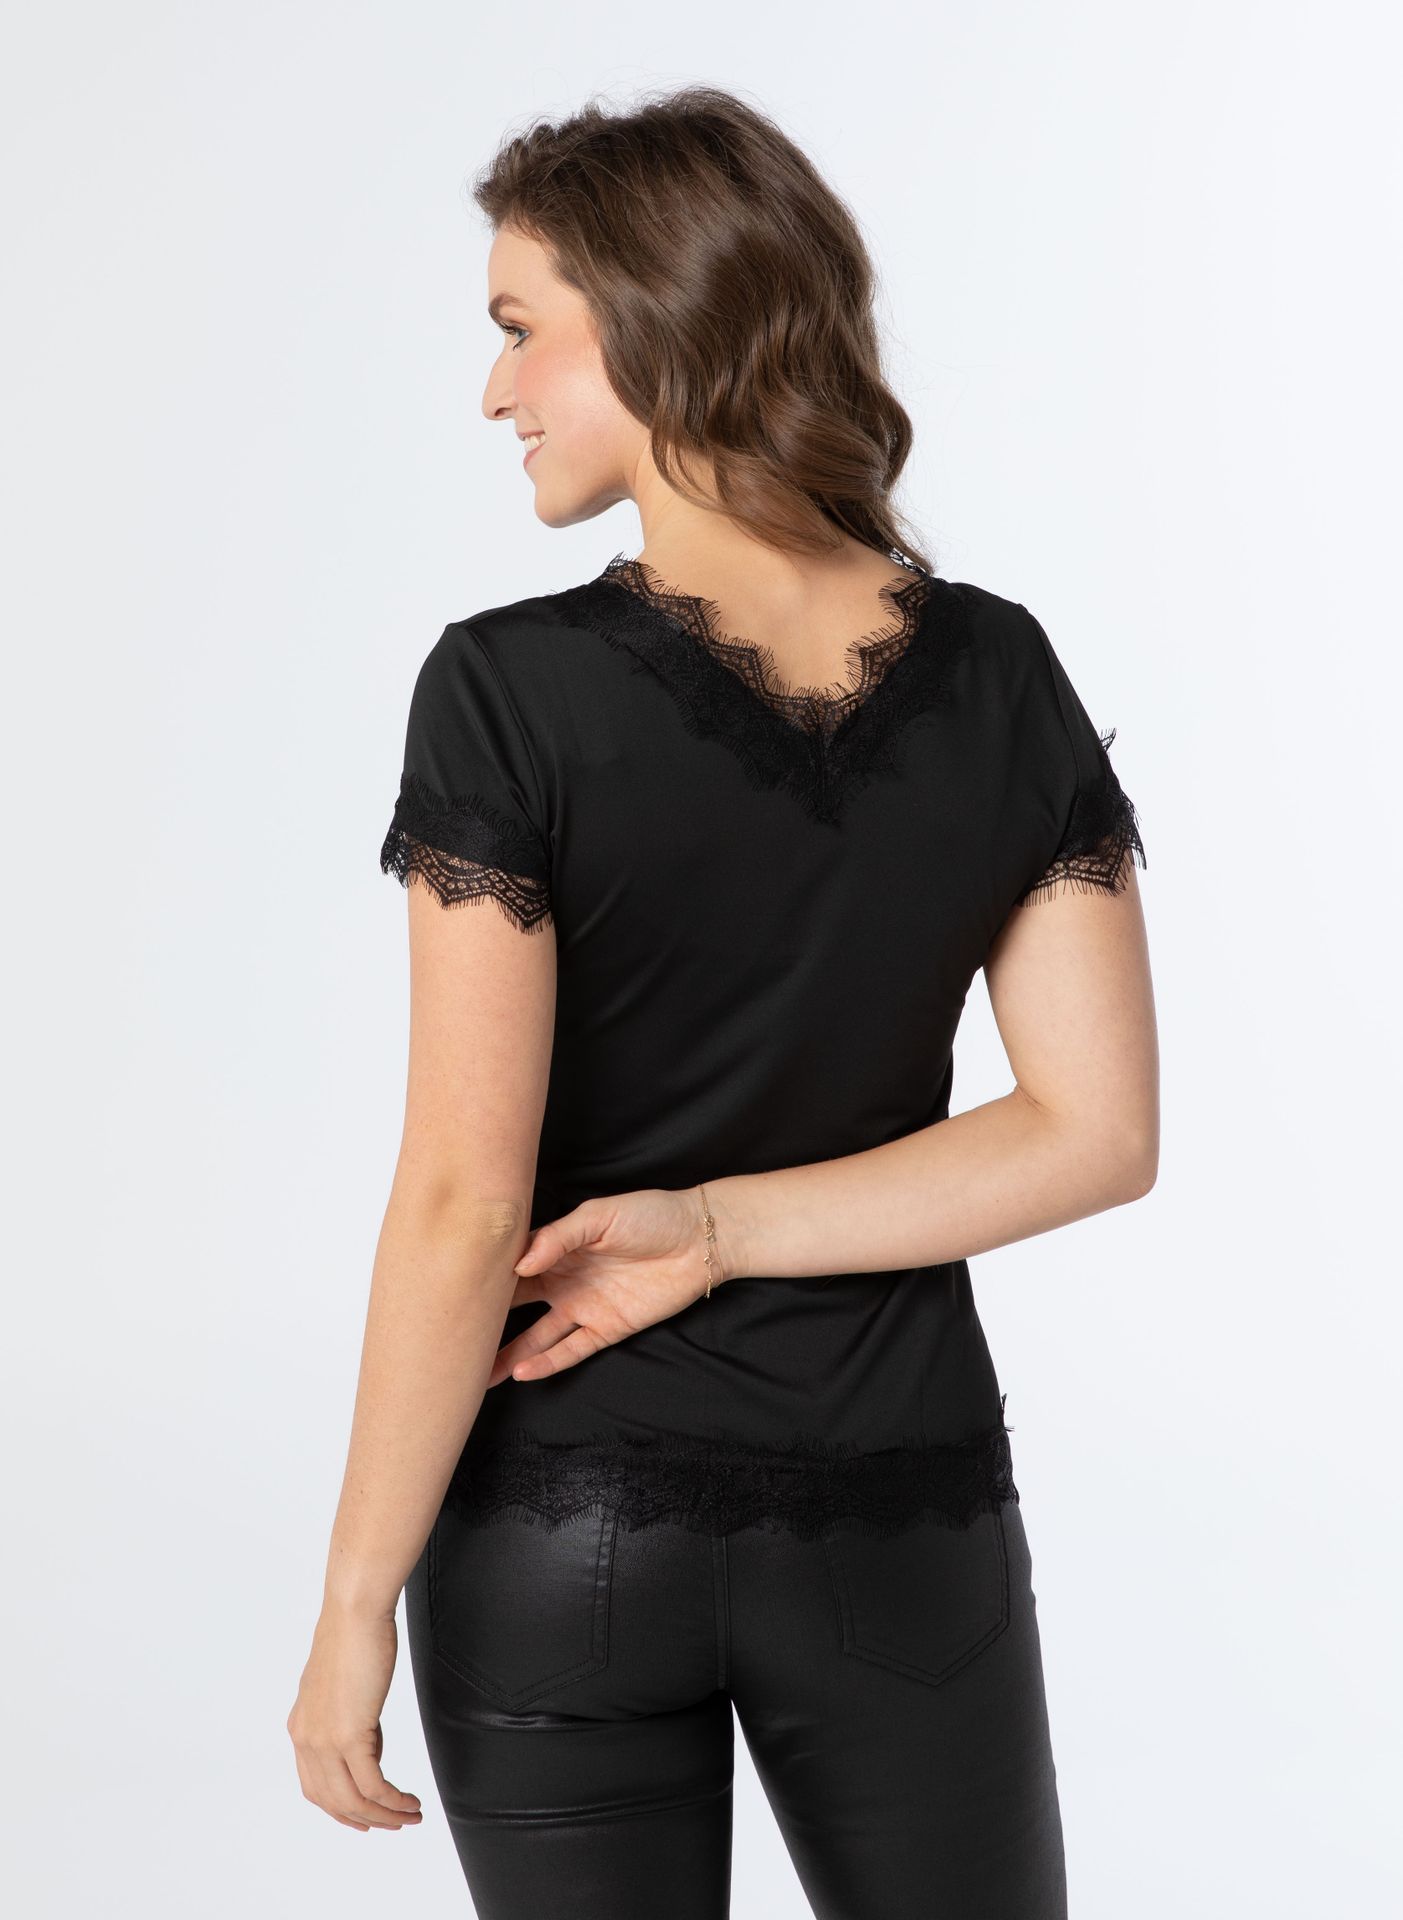 Norah Shirt zwart black 210912-001-36